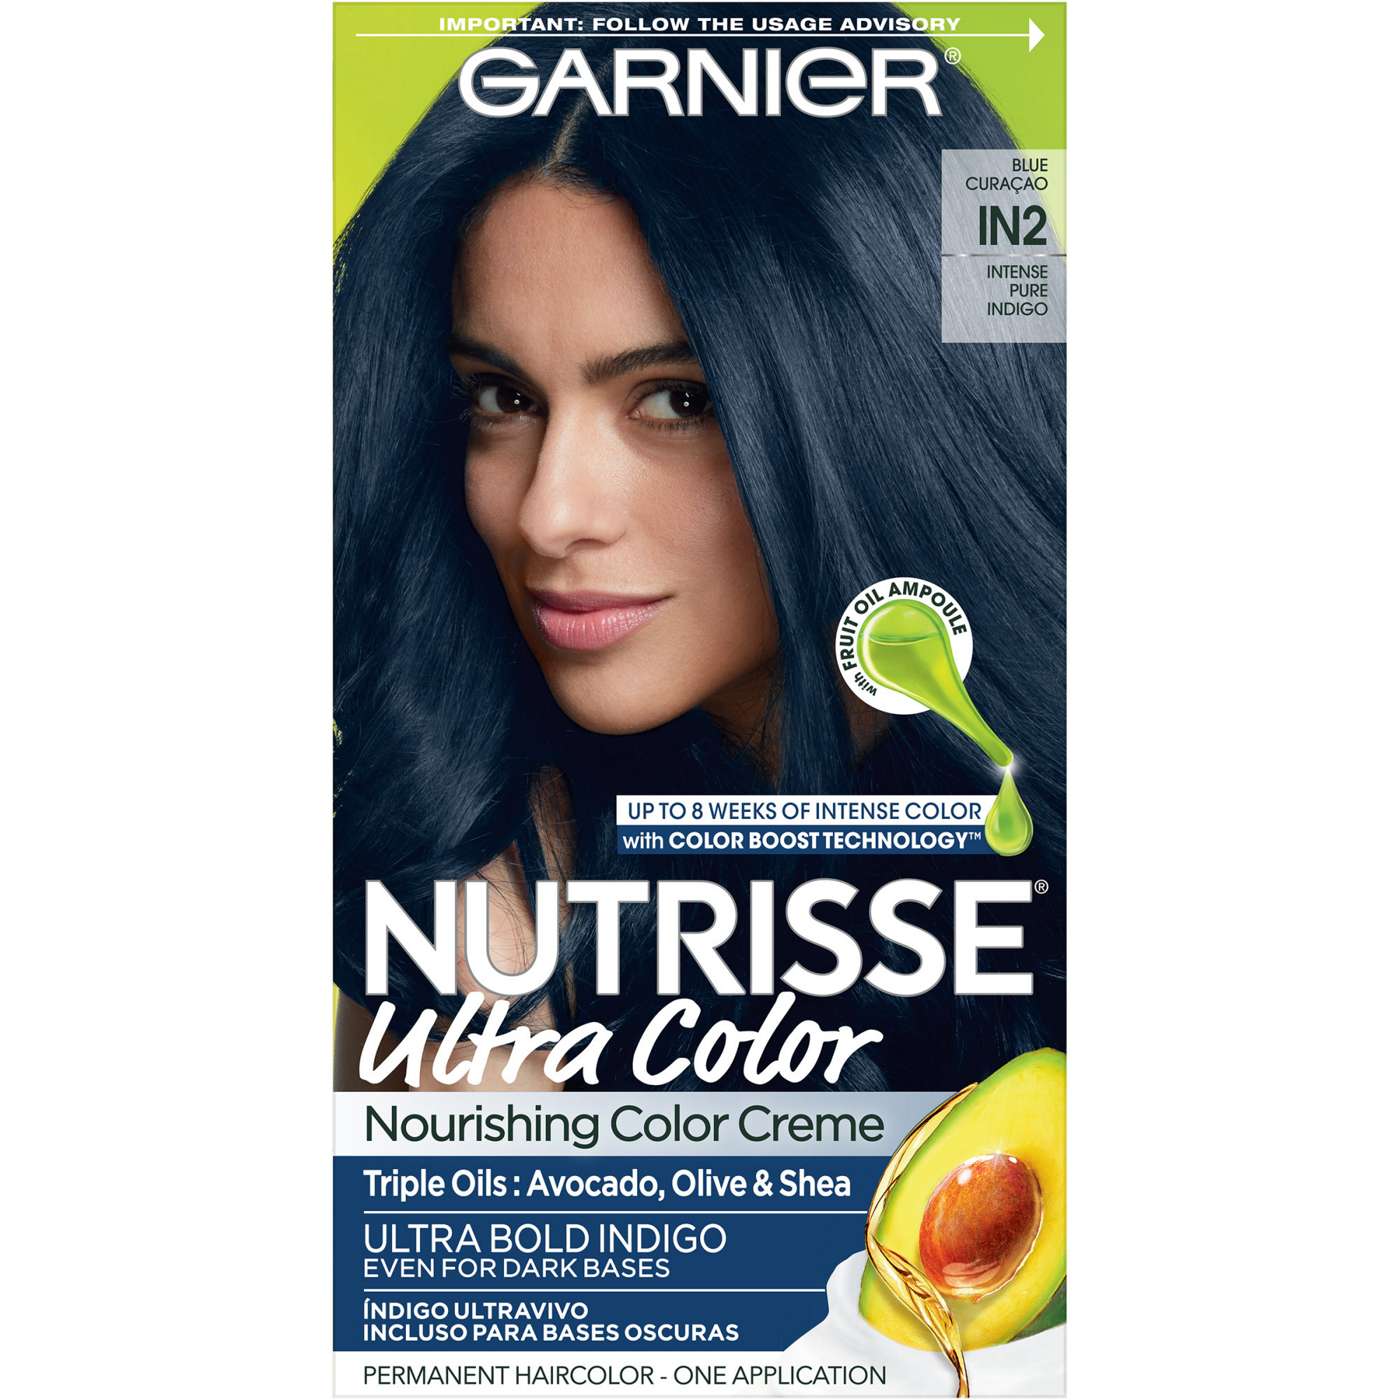 Garnier Nutrisse Ultra Color Nourishing Bold Permanent Hair Color Creme Blue Curaçao IN2; image 1 of 7